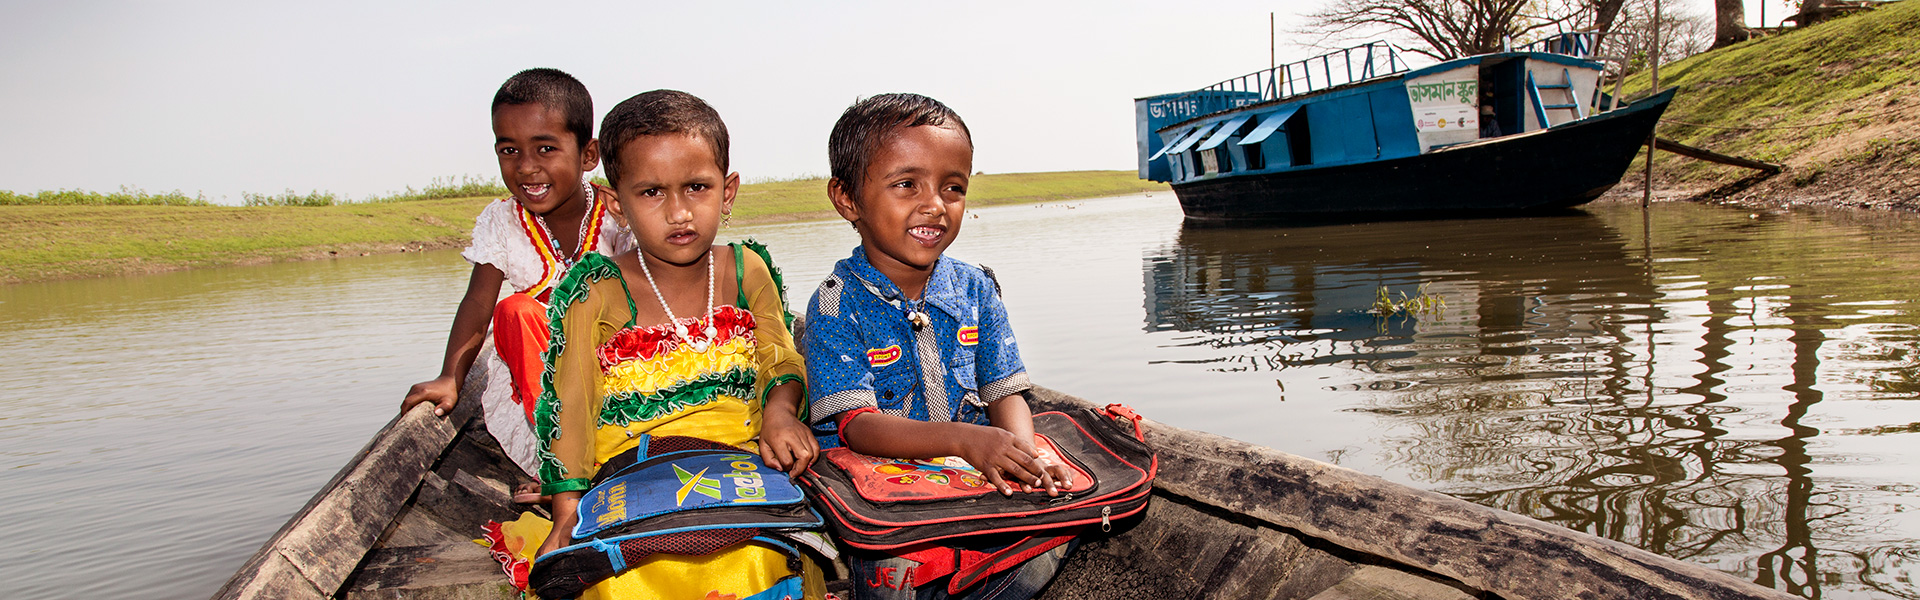 2016-bangladesh-floating-school-photo-hans-jorgen-ramstedt